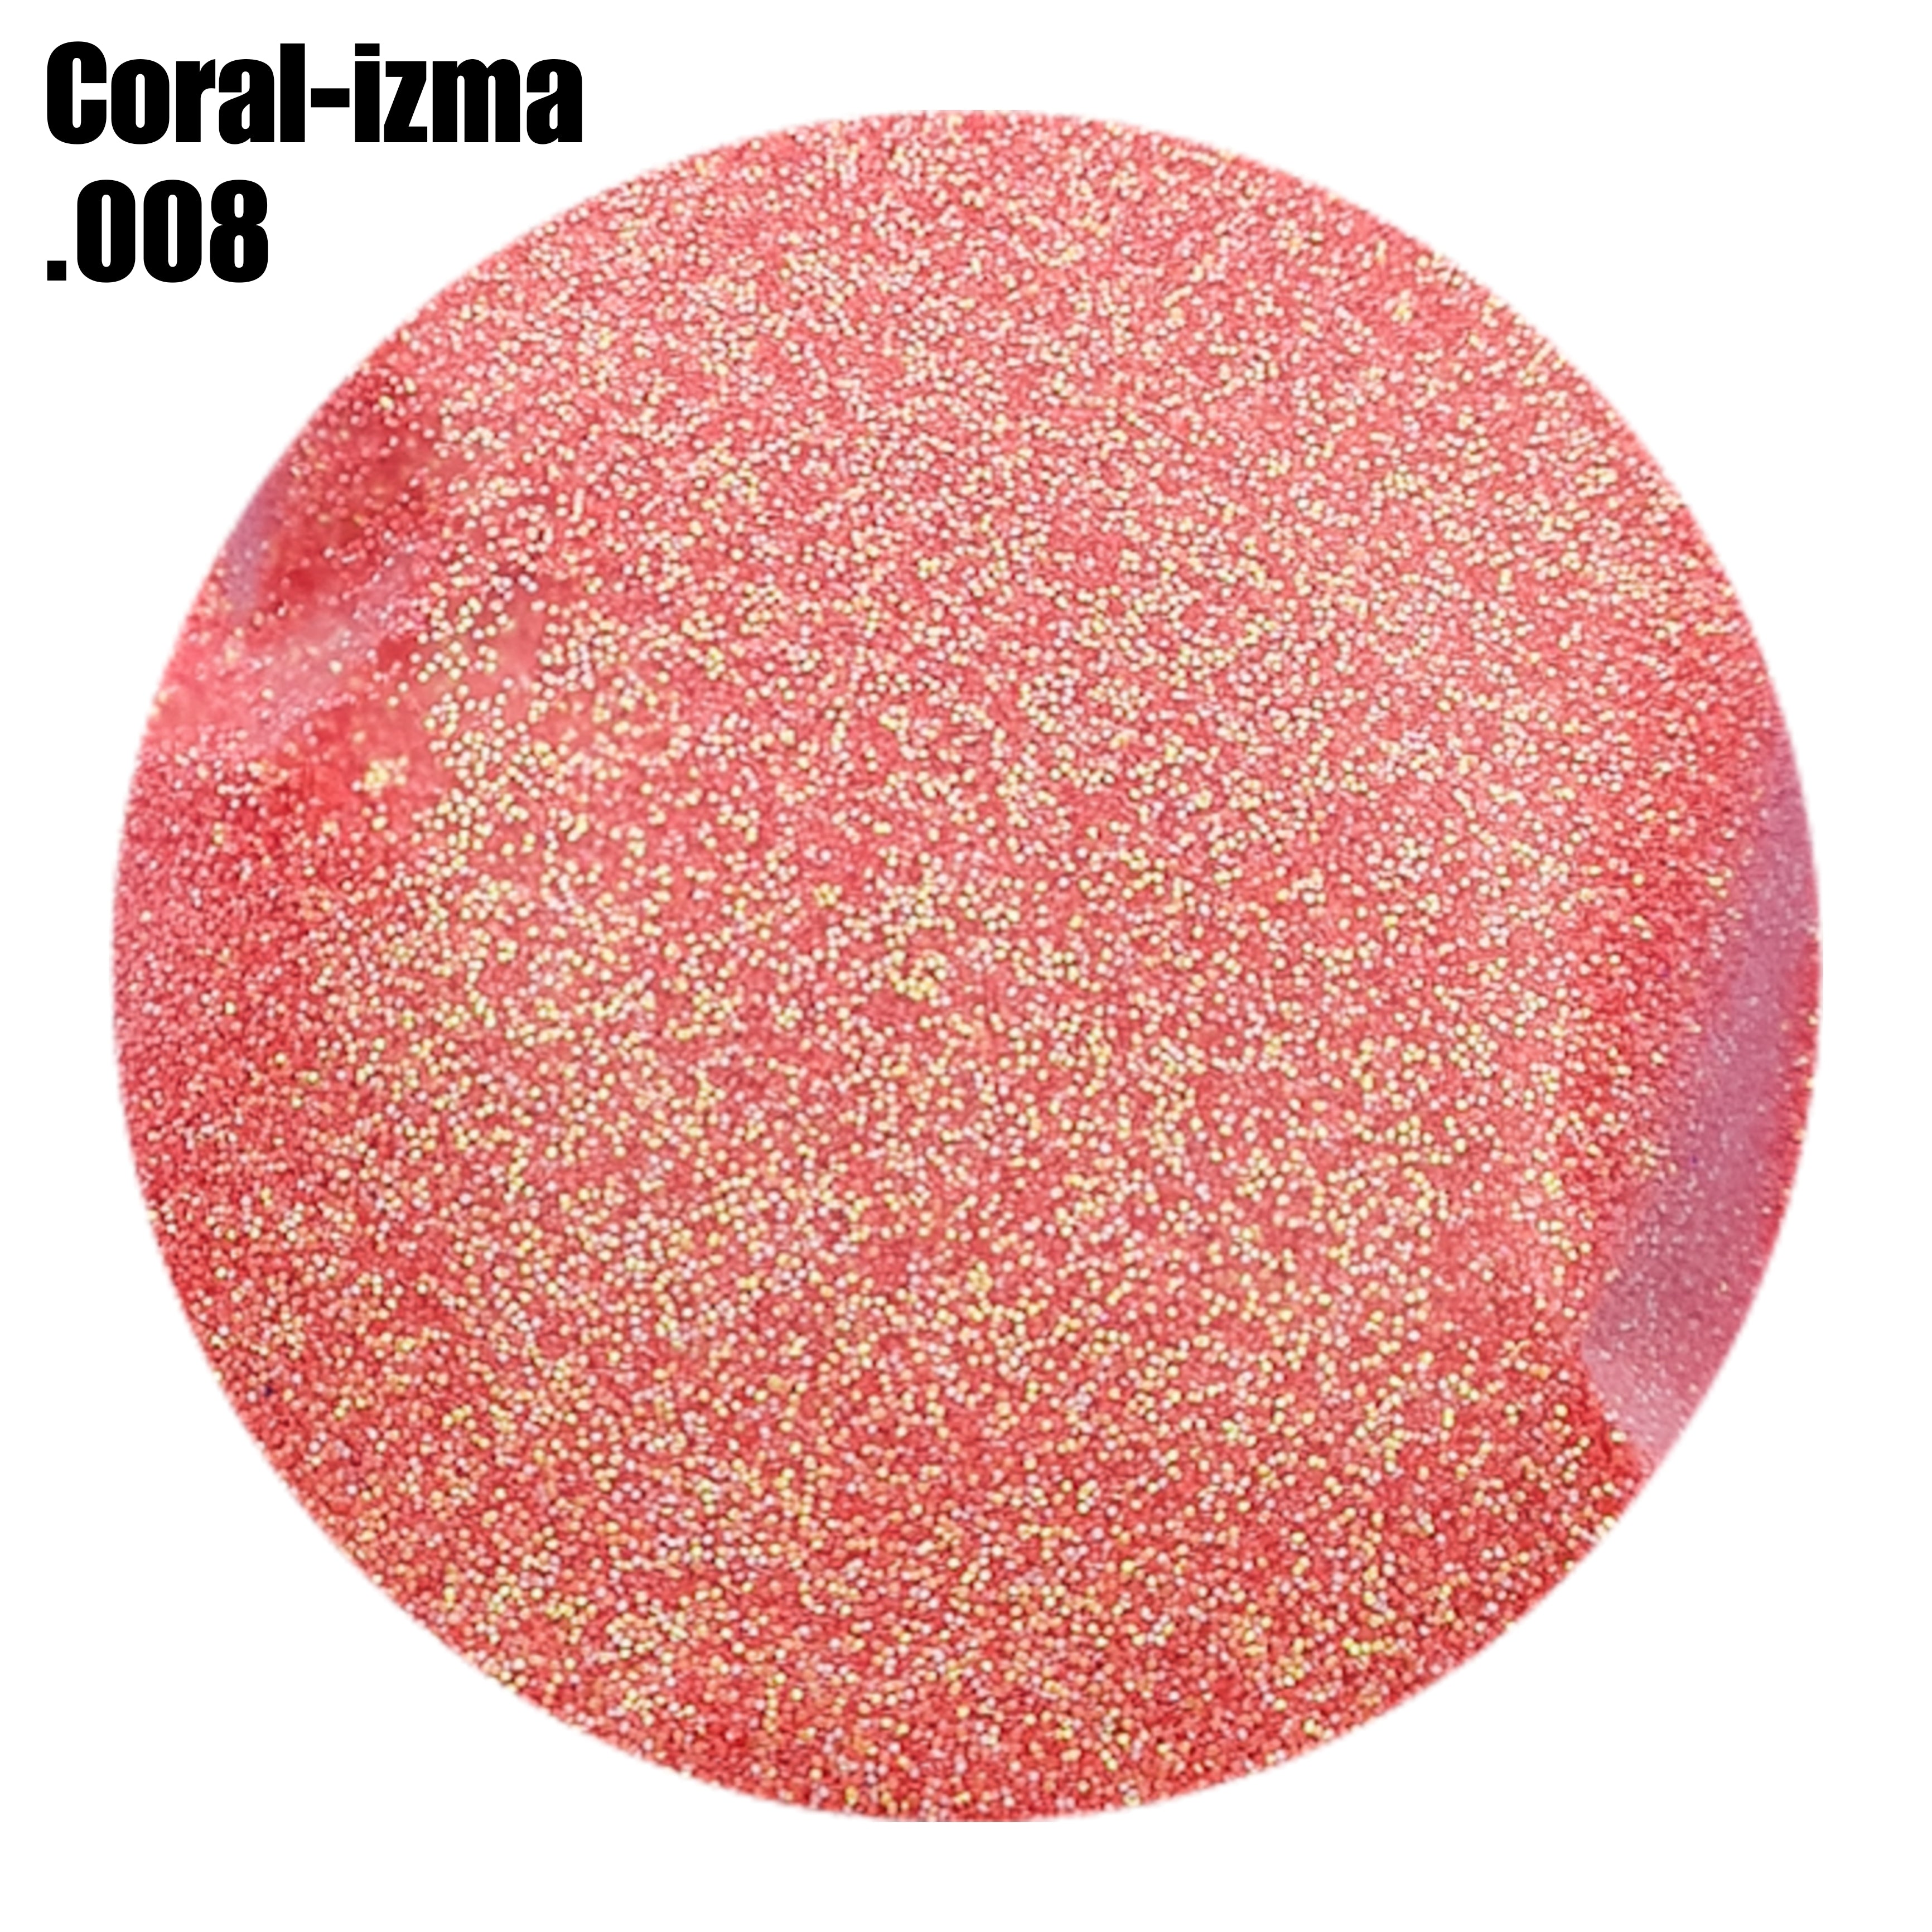 Coral-izma. 008 30 grams